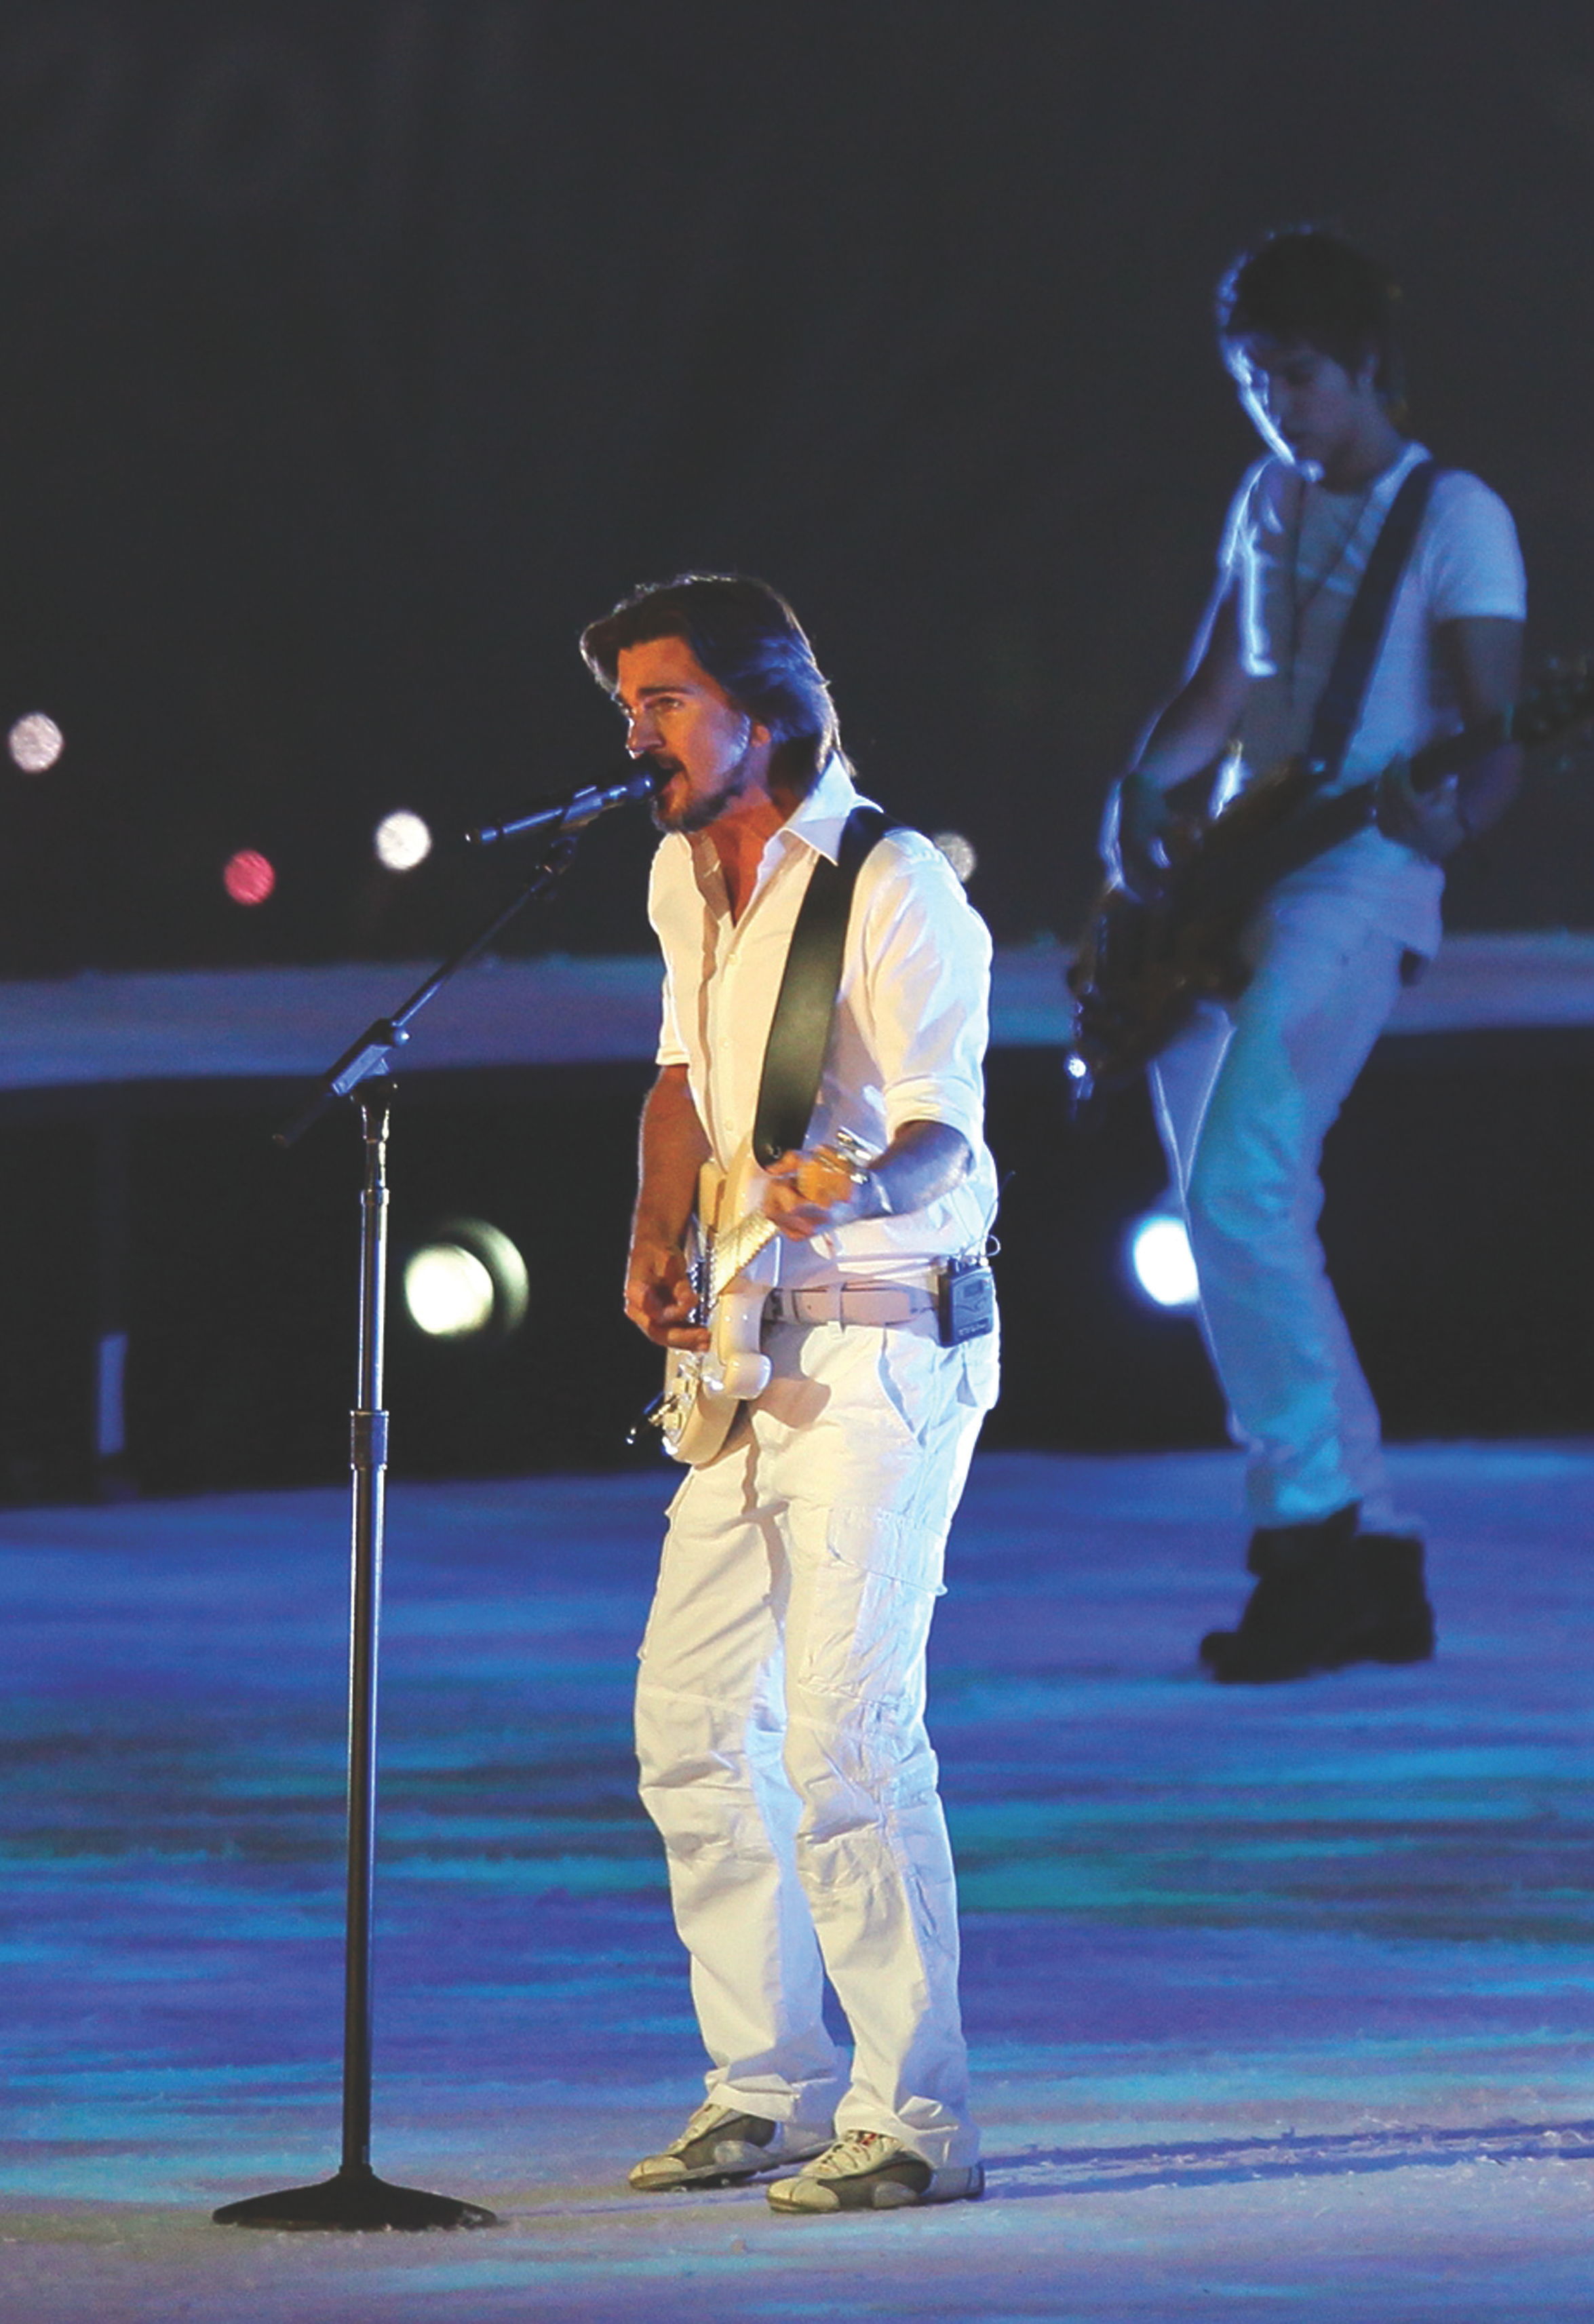 Juanes grabara “Unplugged” en febrero